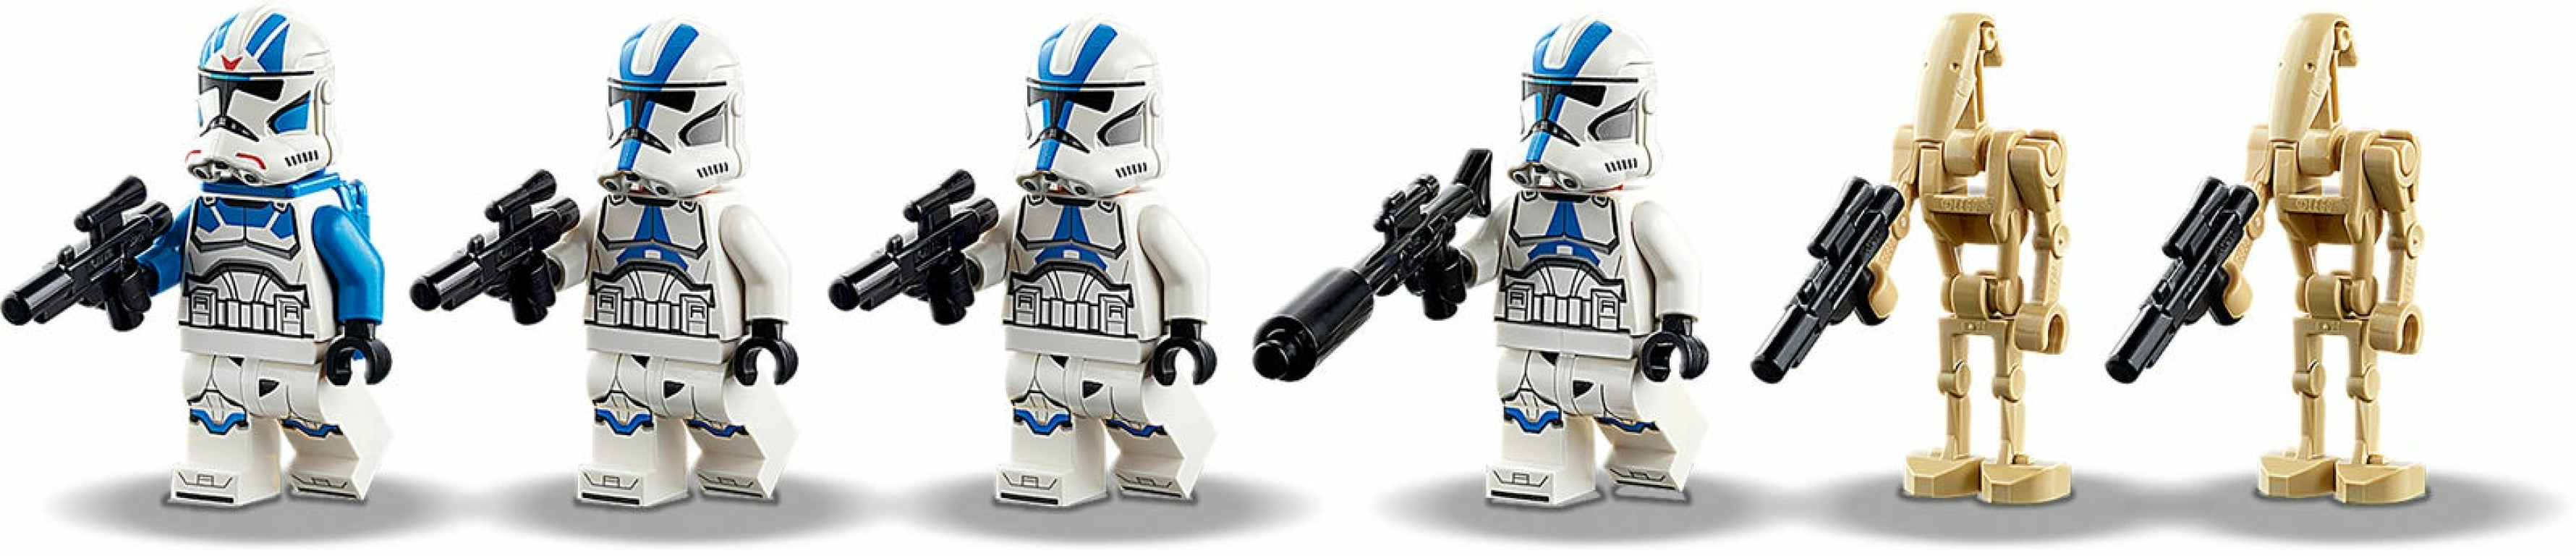 LEGO® Star Wars 501st Legion™ Clone Troopers minifigures